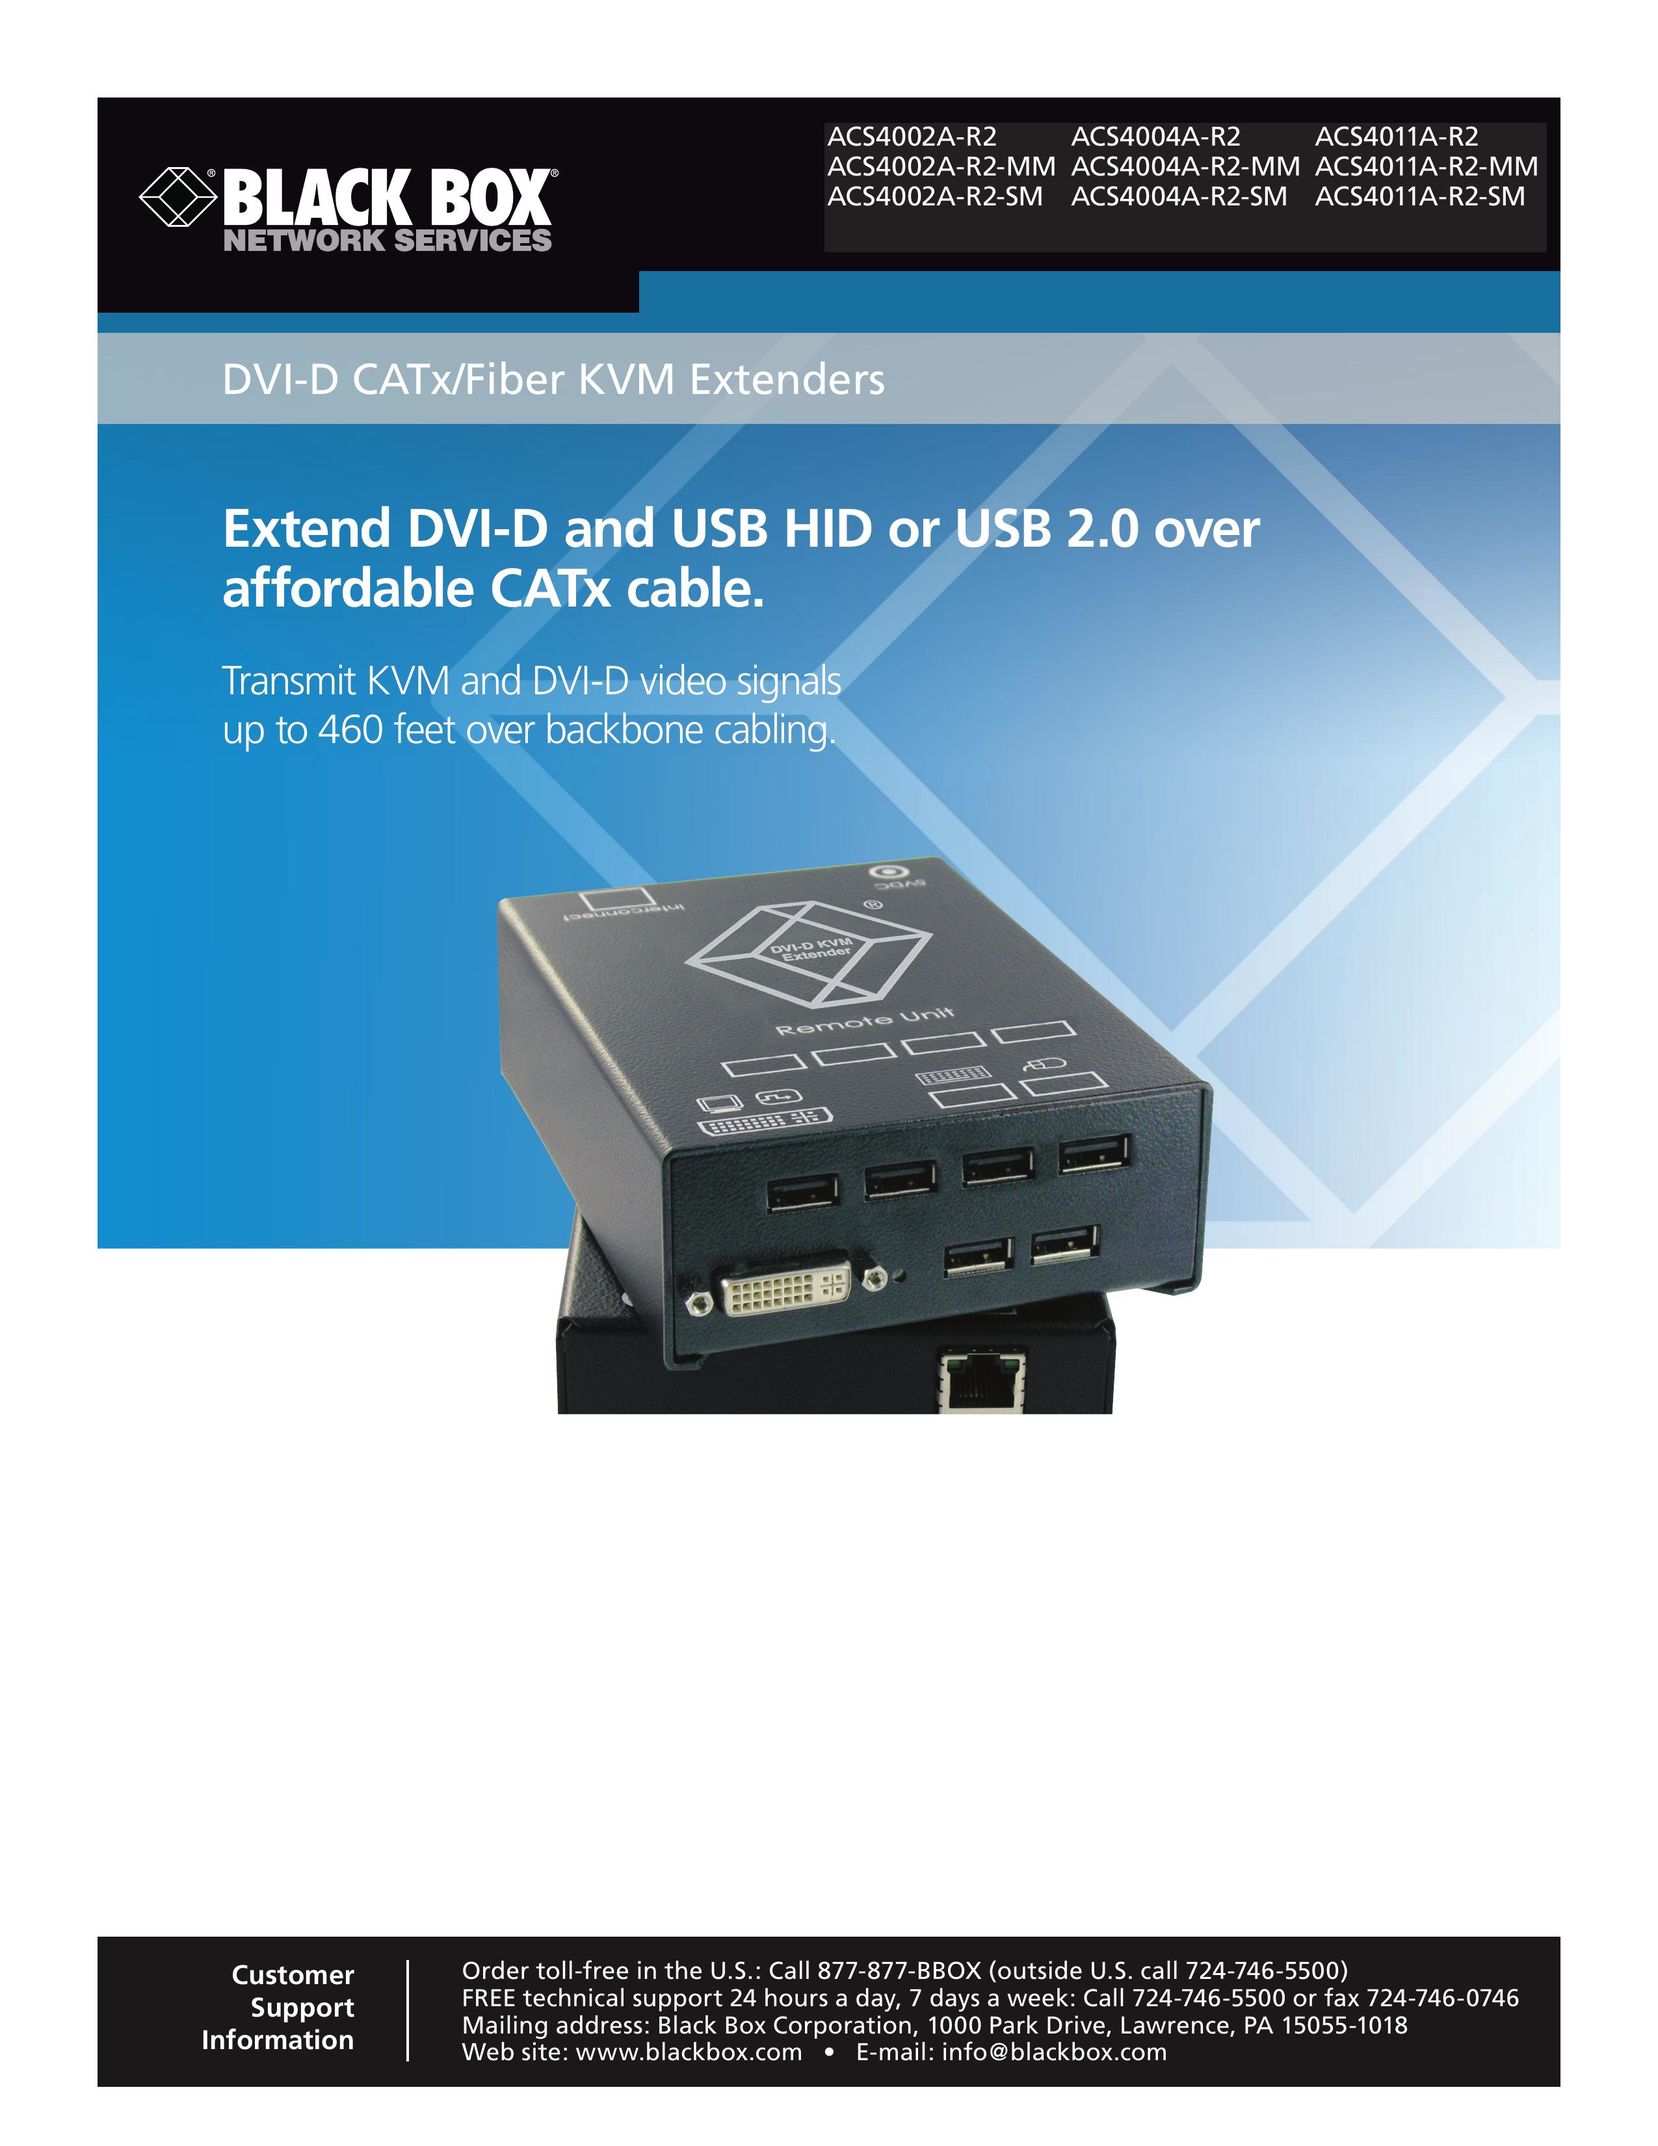 Black Box ACS4011A-R2 Network Hardware User Manual